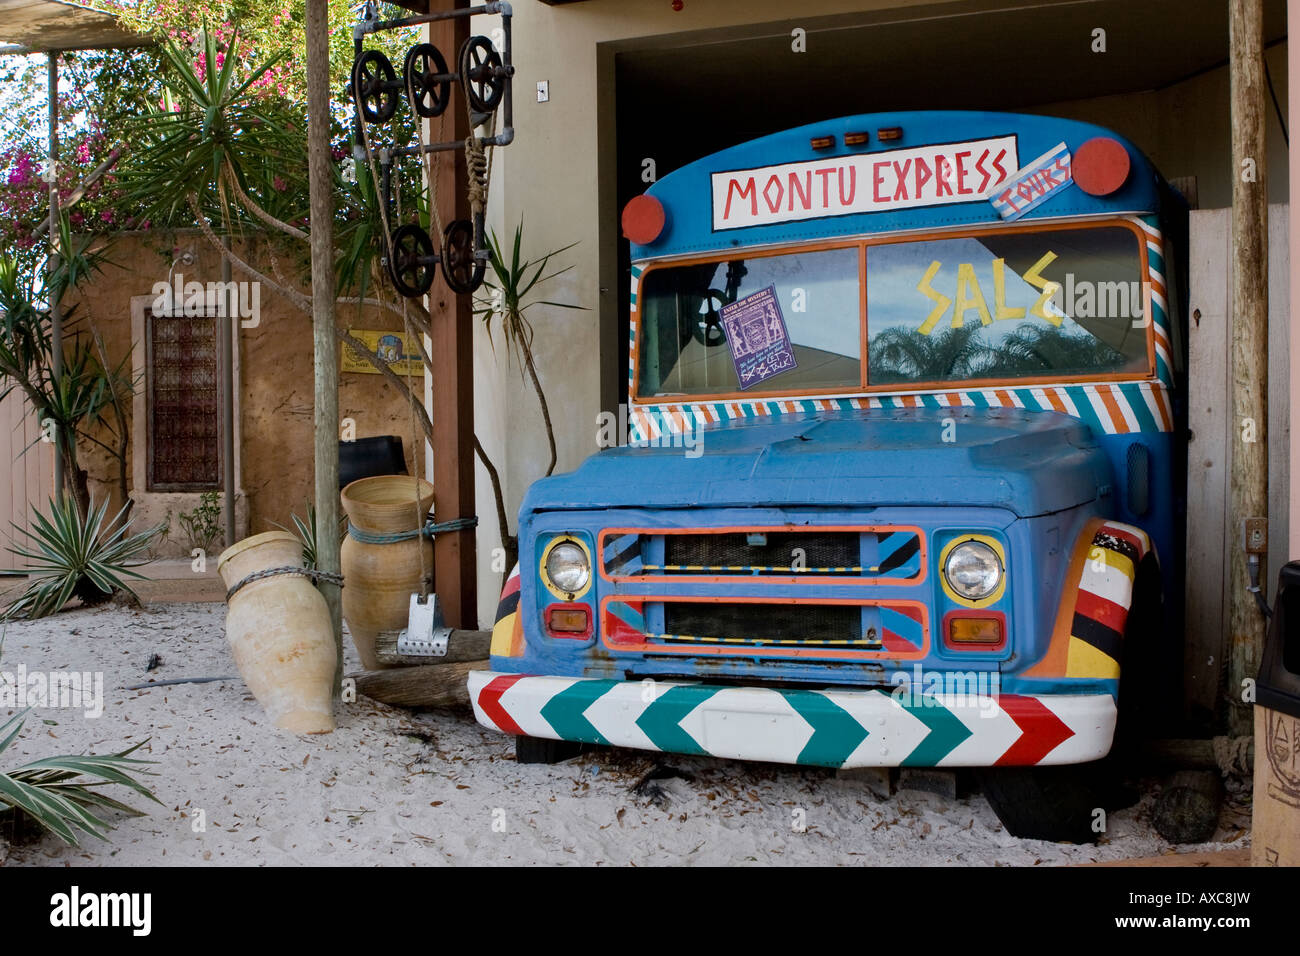 Montu Express Bus Transport Display At Busch Gardens Florida Usa